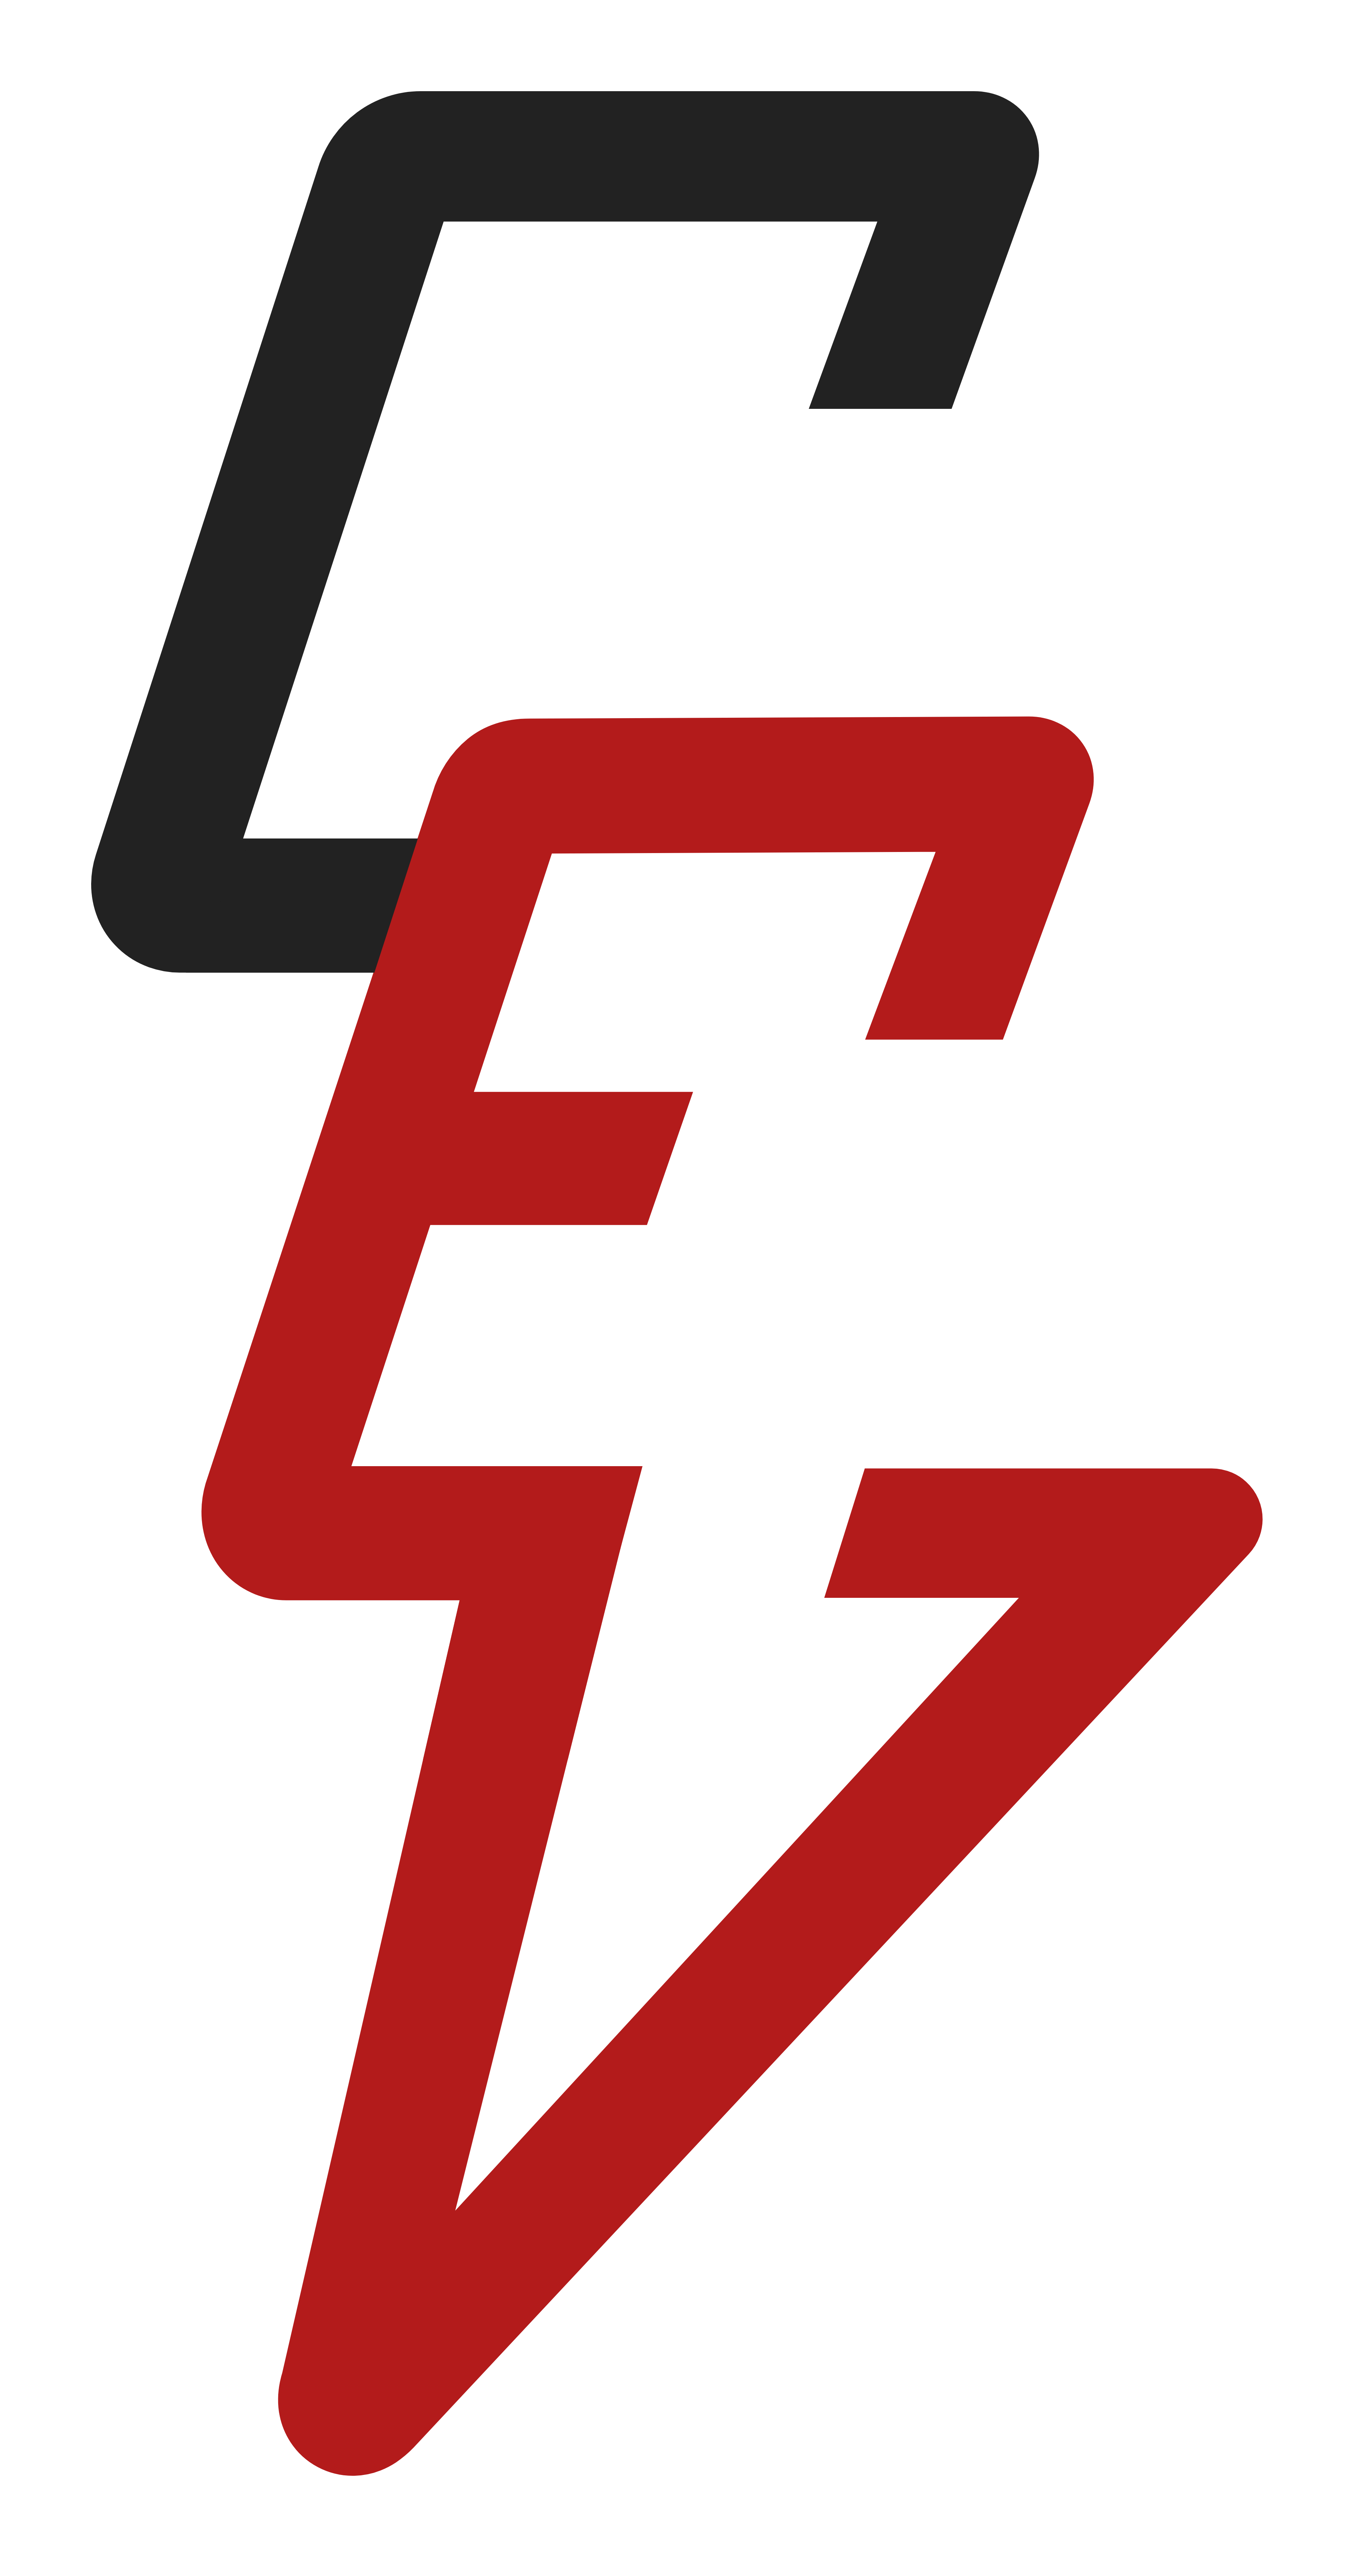 Cornell Electric Vehicles logo